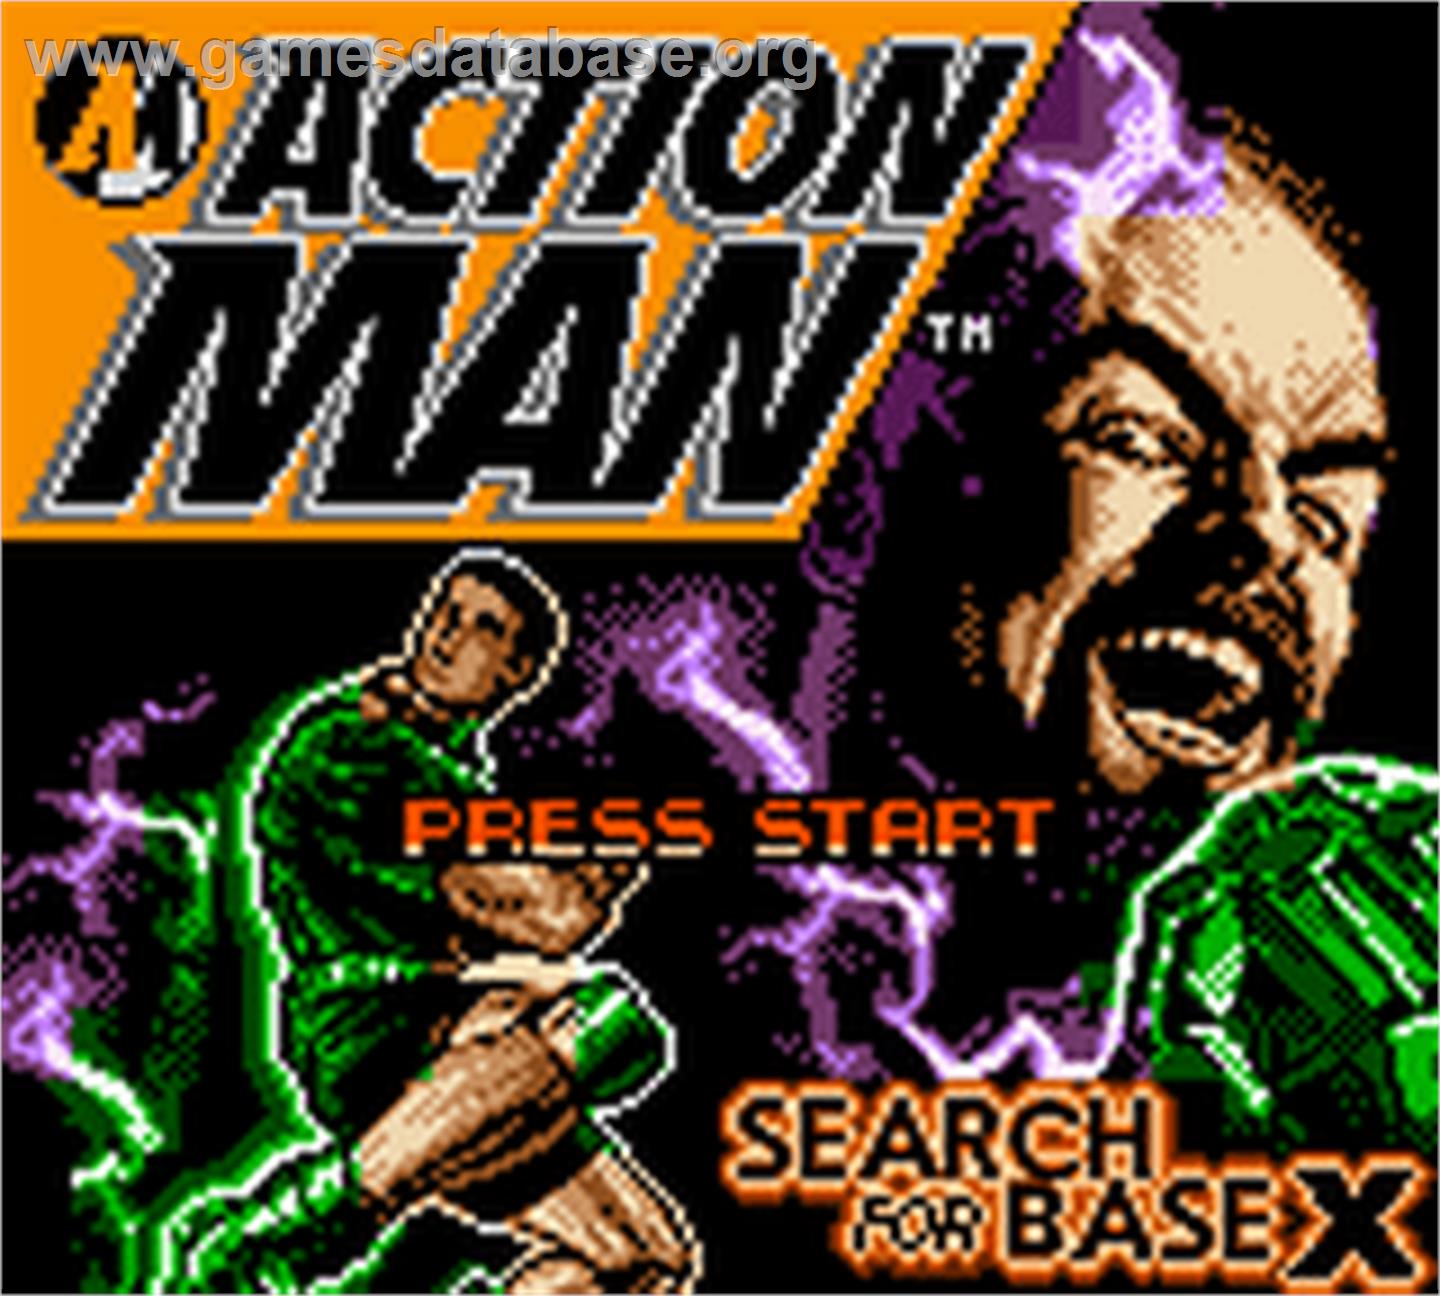 Action Man - Search for Base X - Nintendo Game Boy Color - Artwork - Title Screen